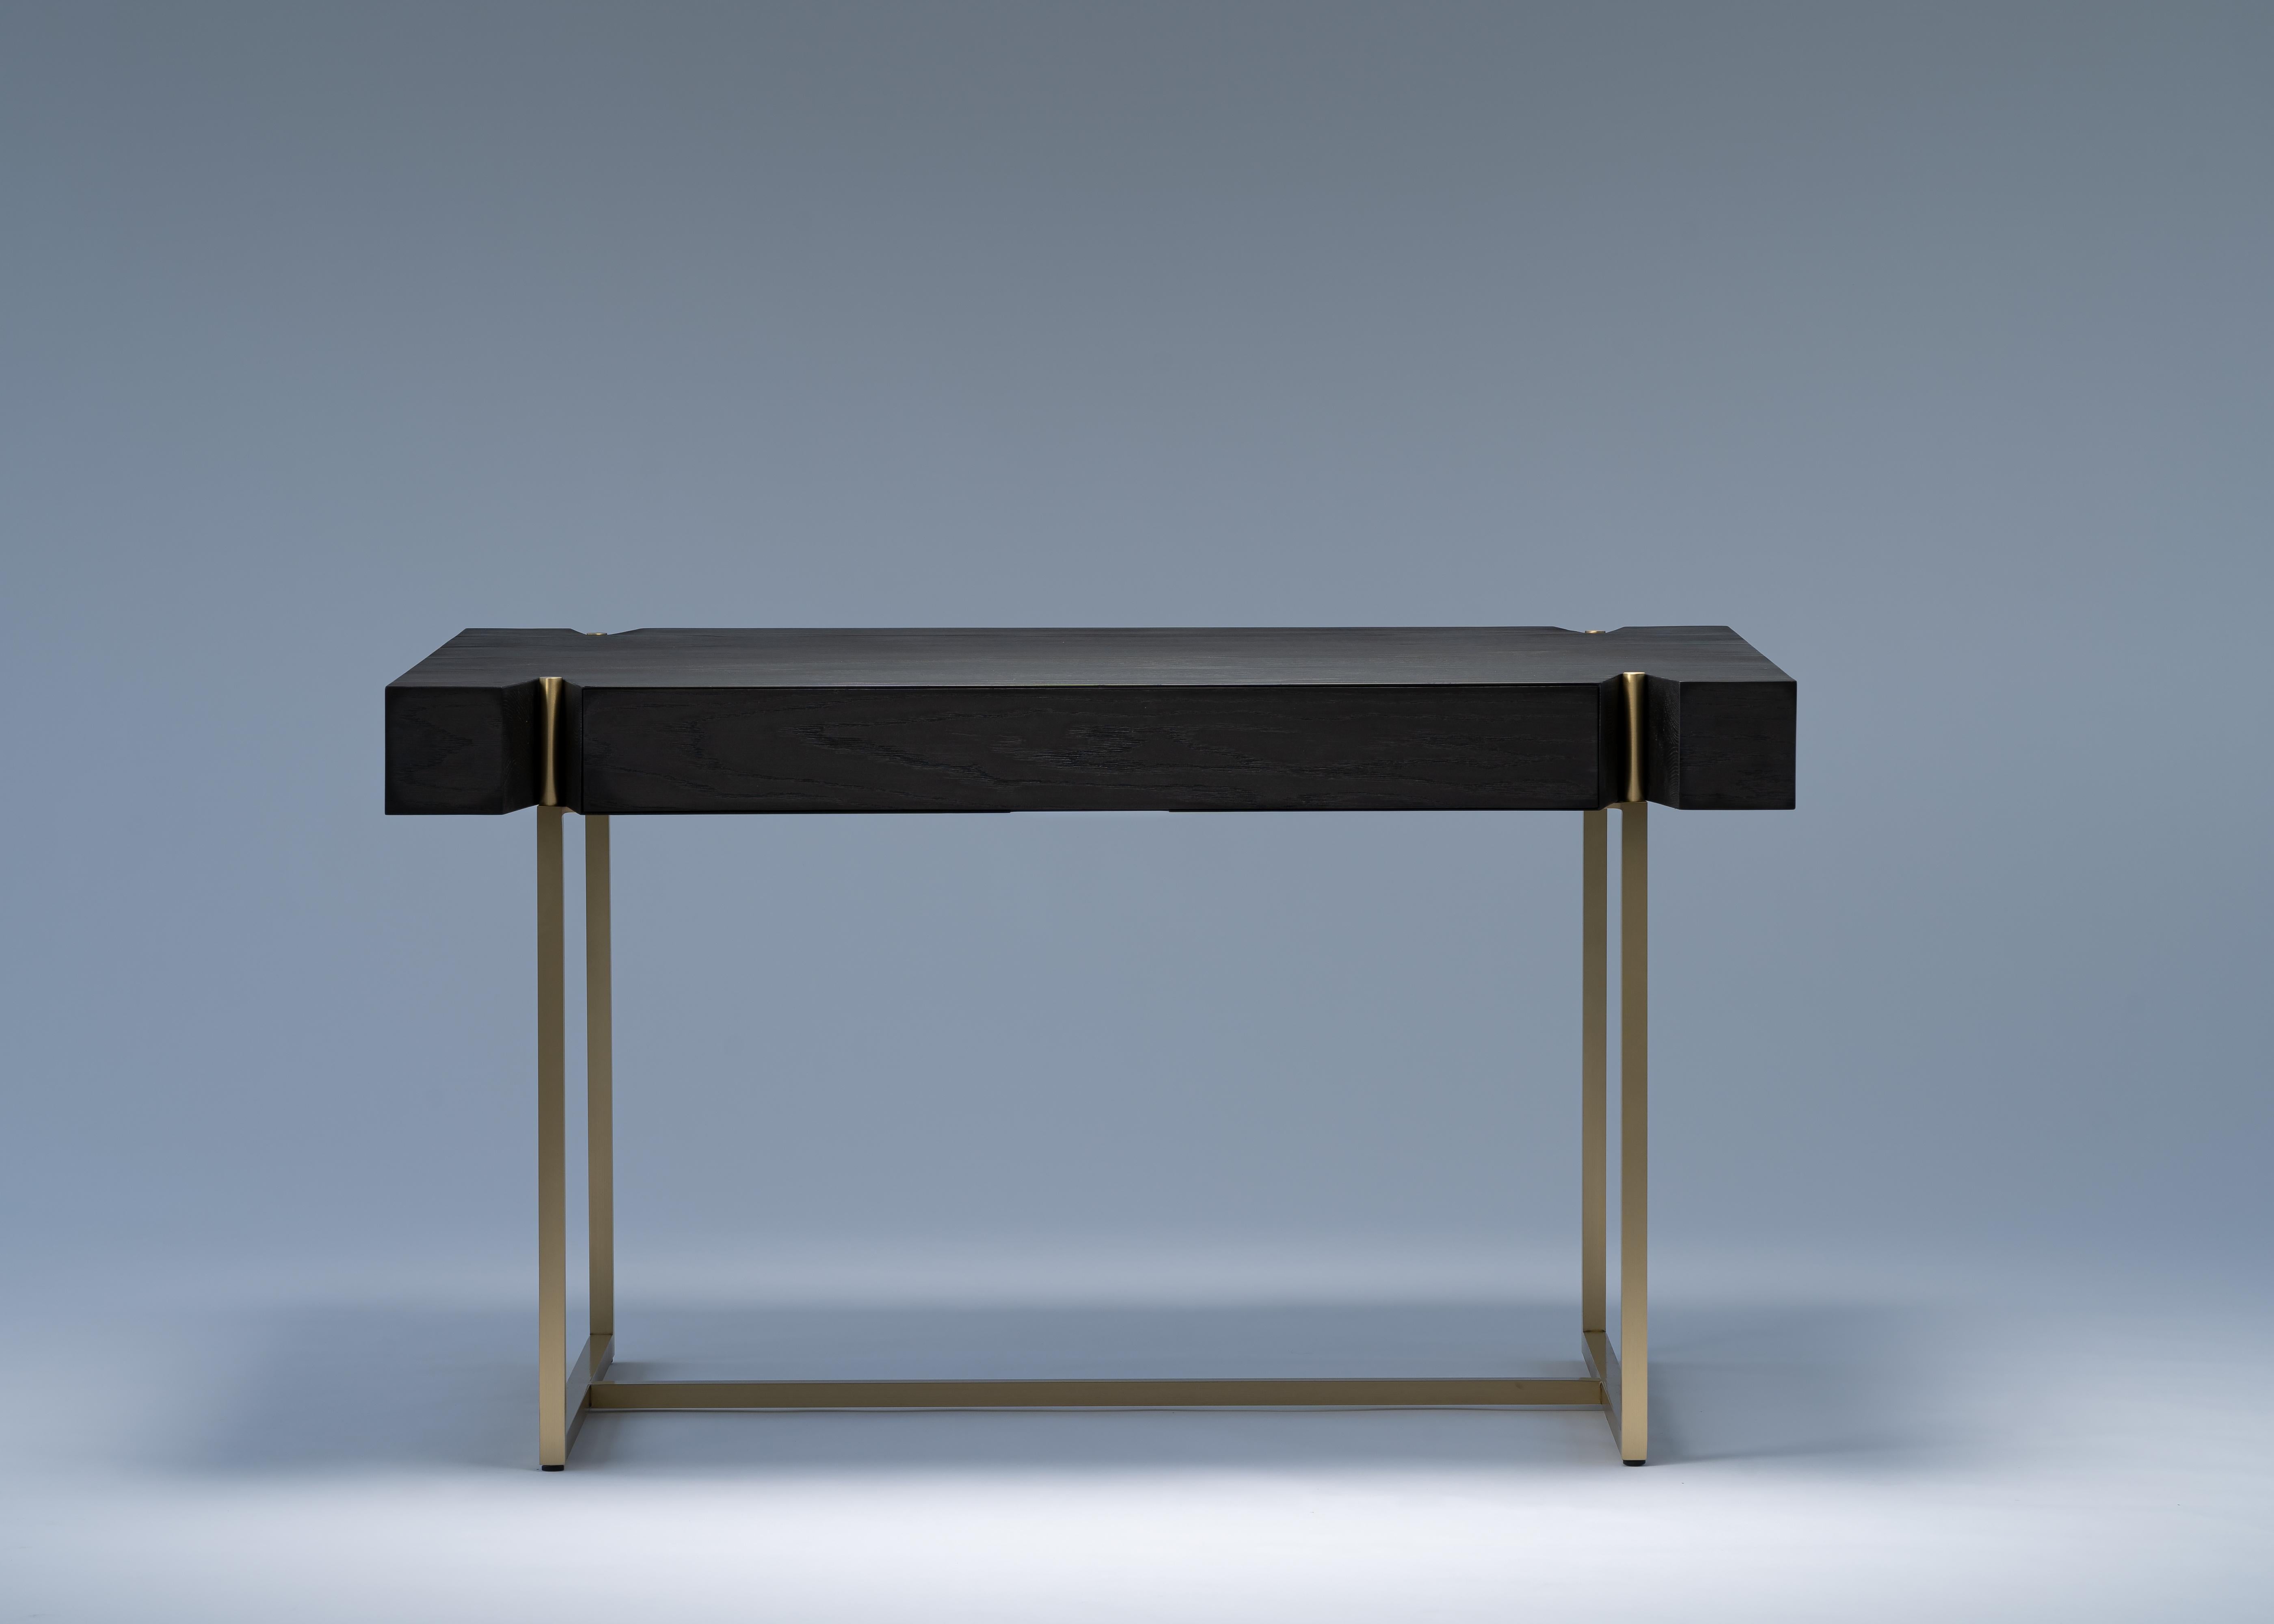 Marta desk by Mandy Graham

Marta
M03, writing desk table with drawer
ebonized sandblasted oak / walnut, brushed brass / dark bronze base
Measures: 54